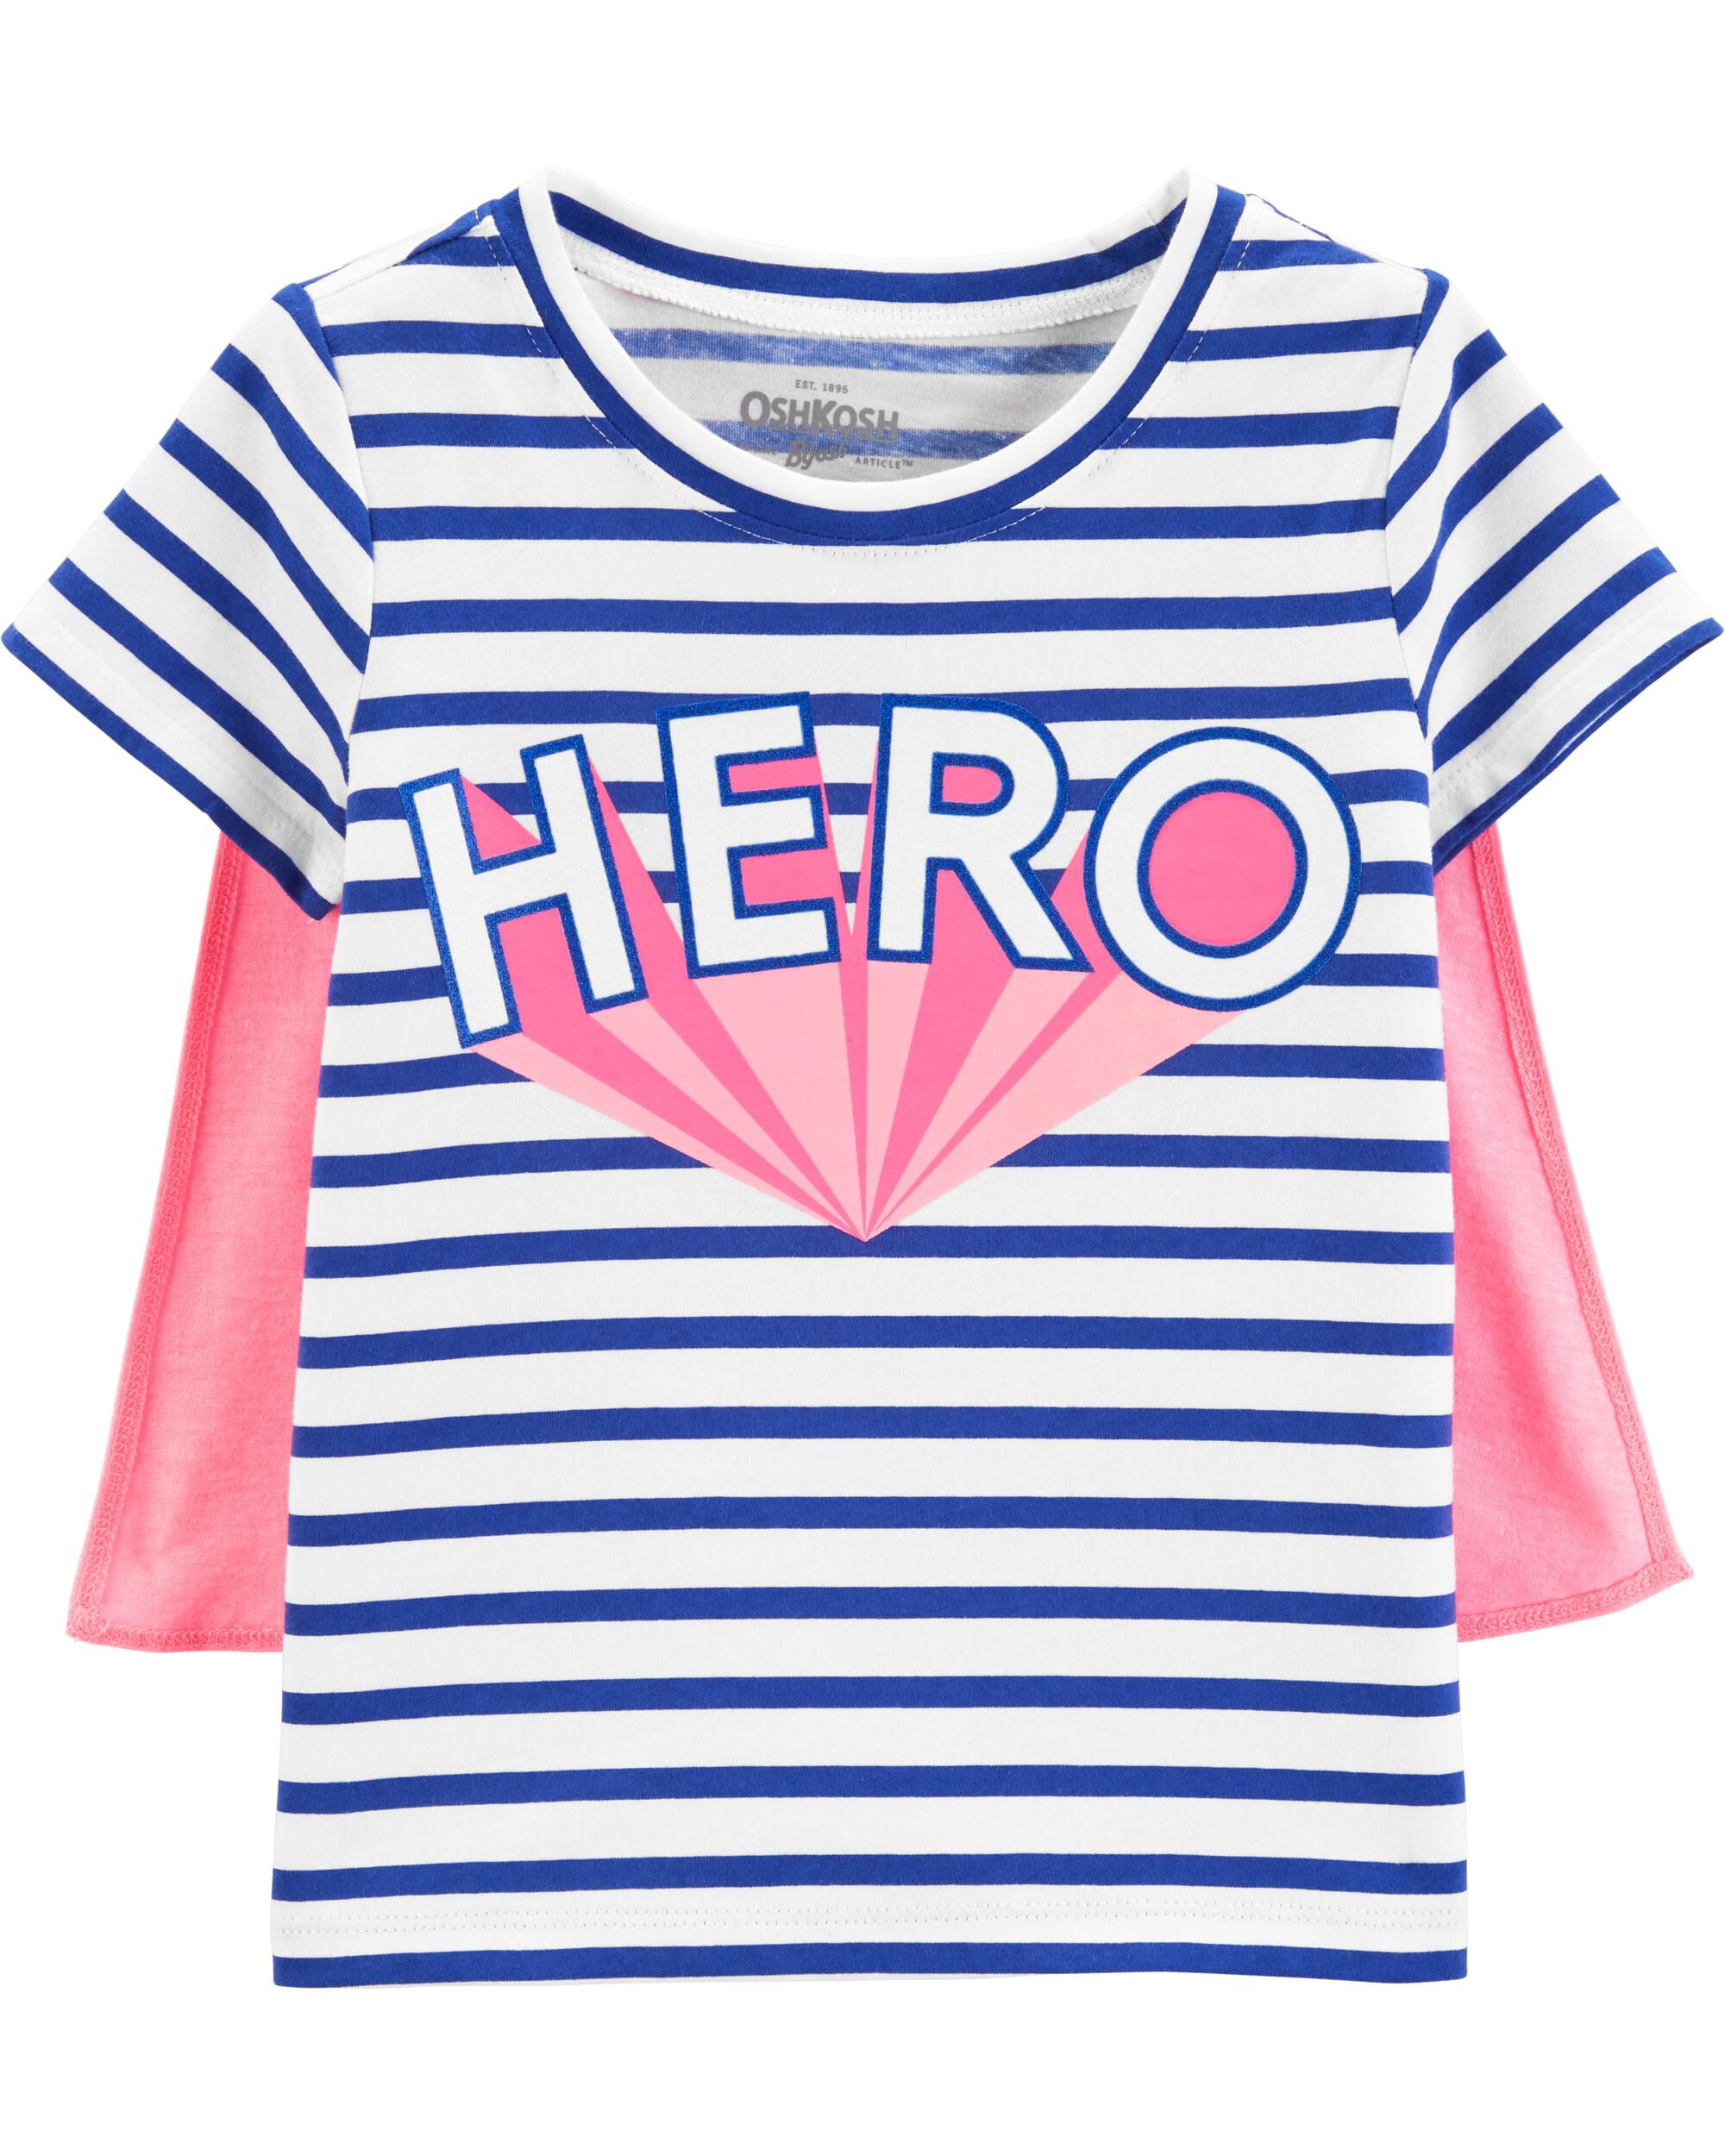 superhero t shirt toddler girl